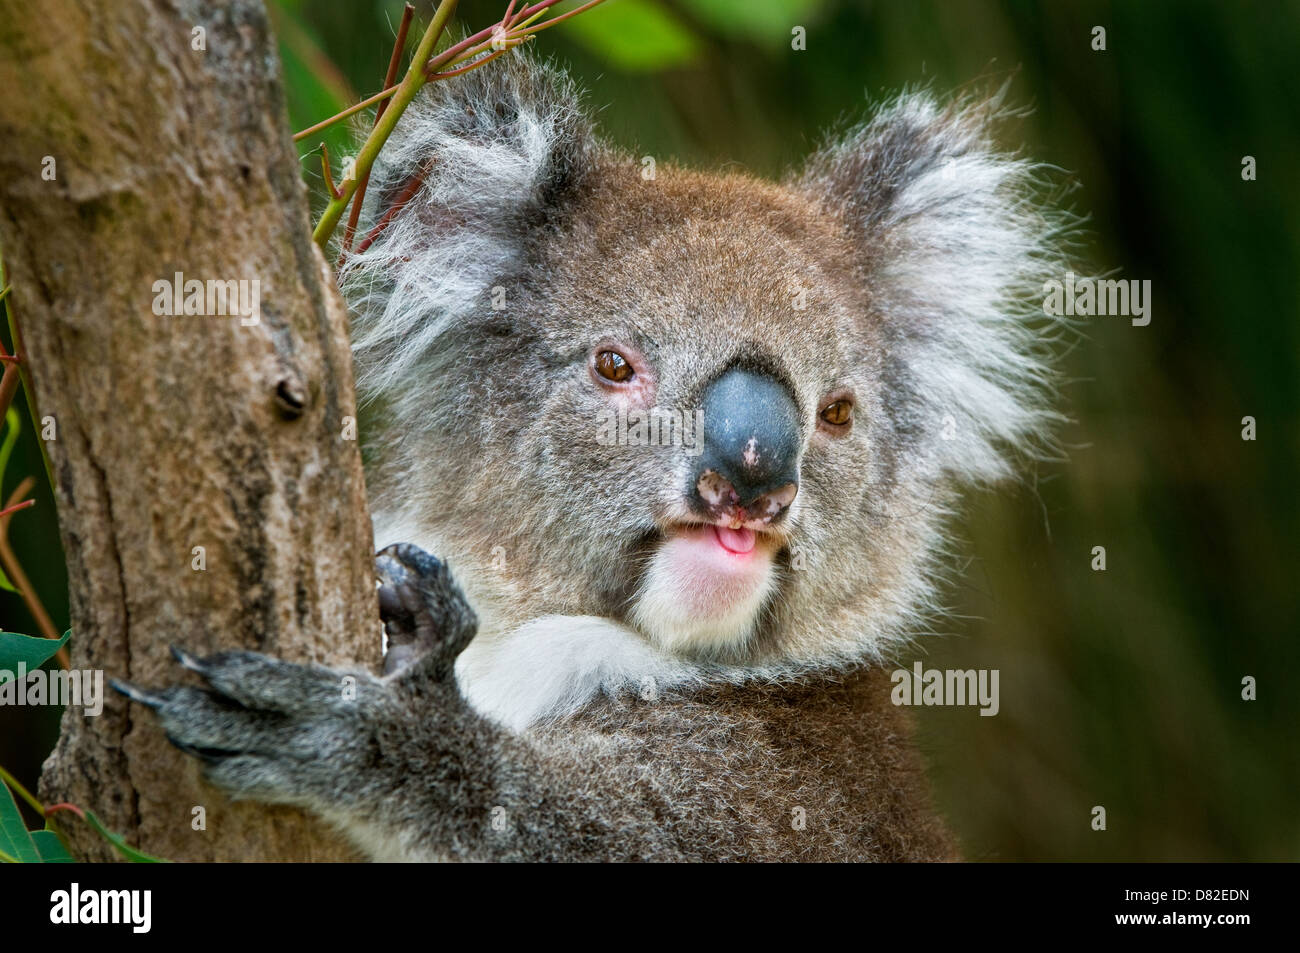 Koala hanging in a eucalyptus tree. Stock Photo